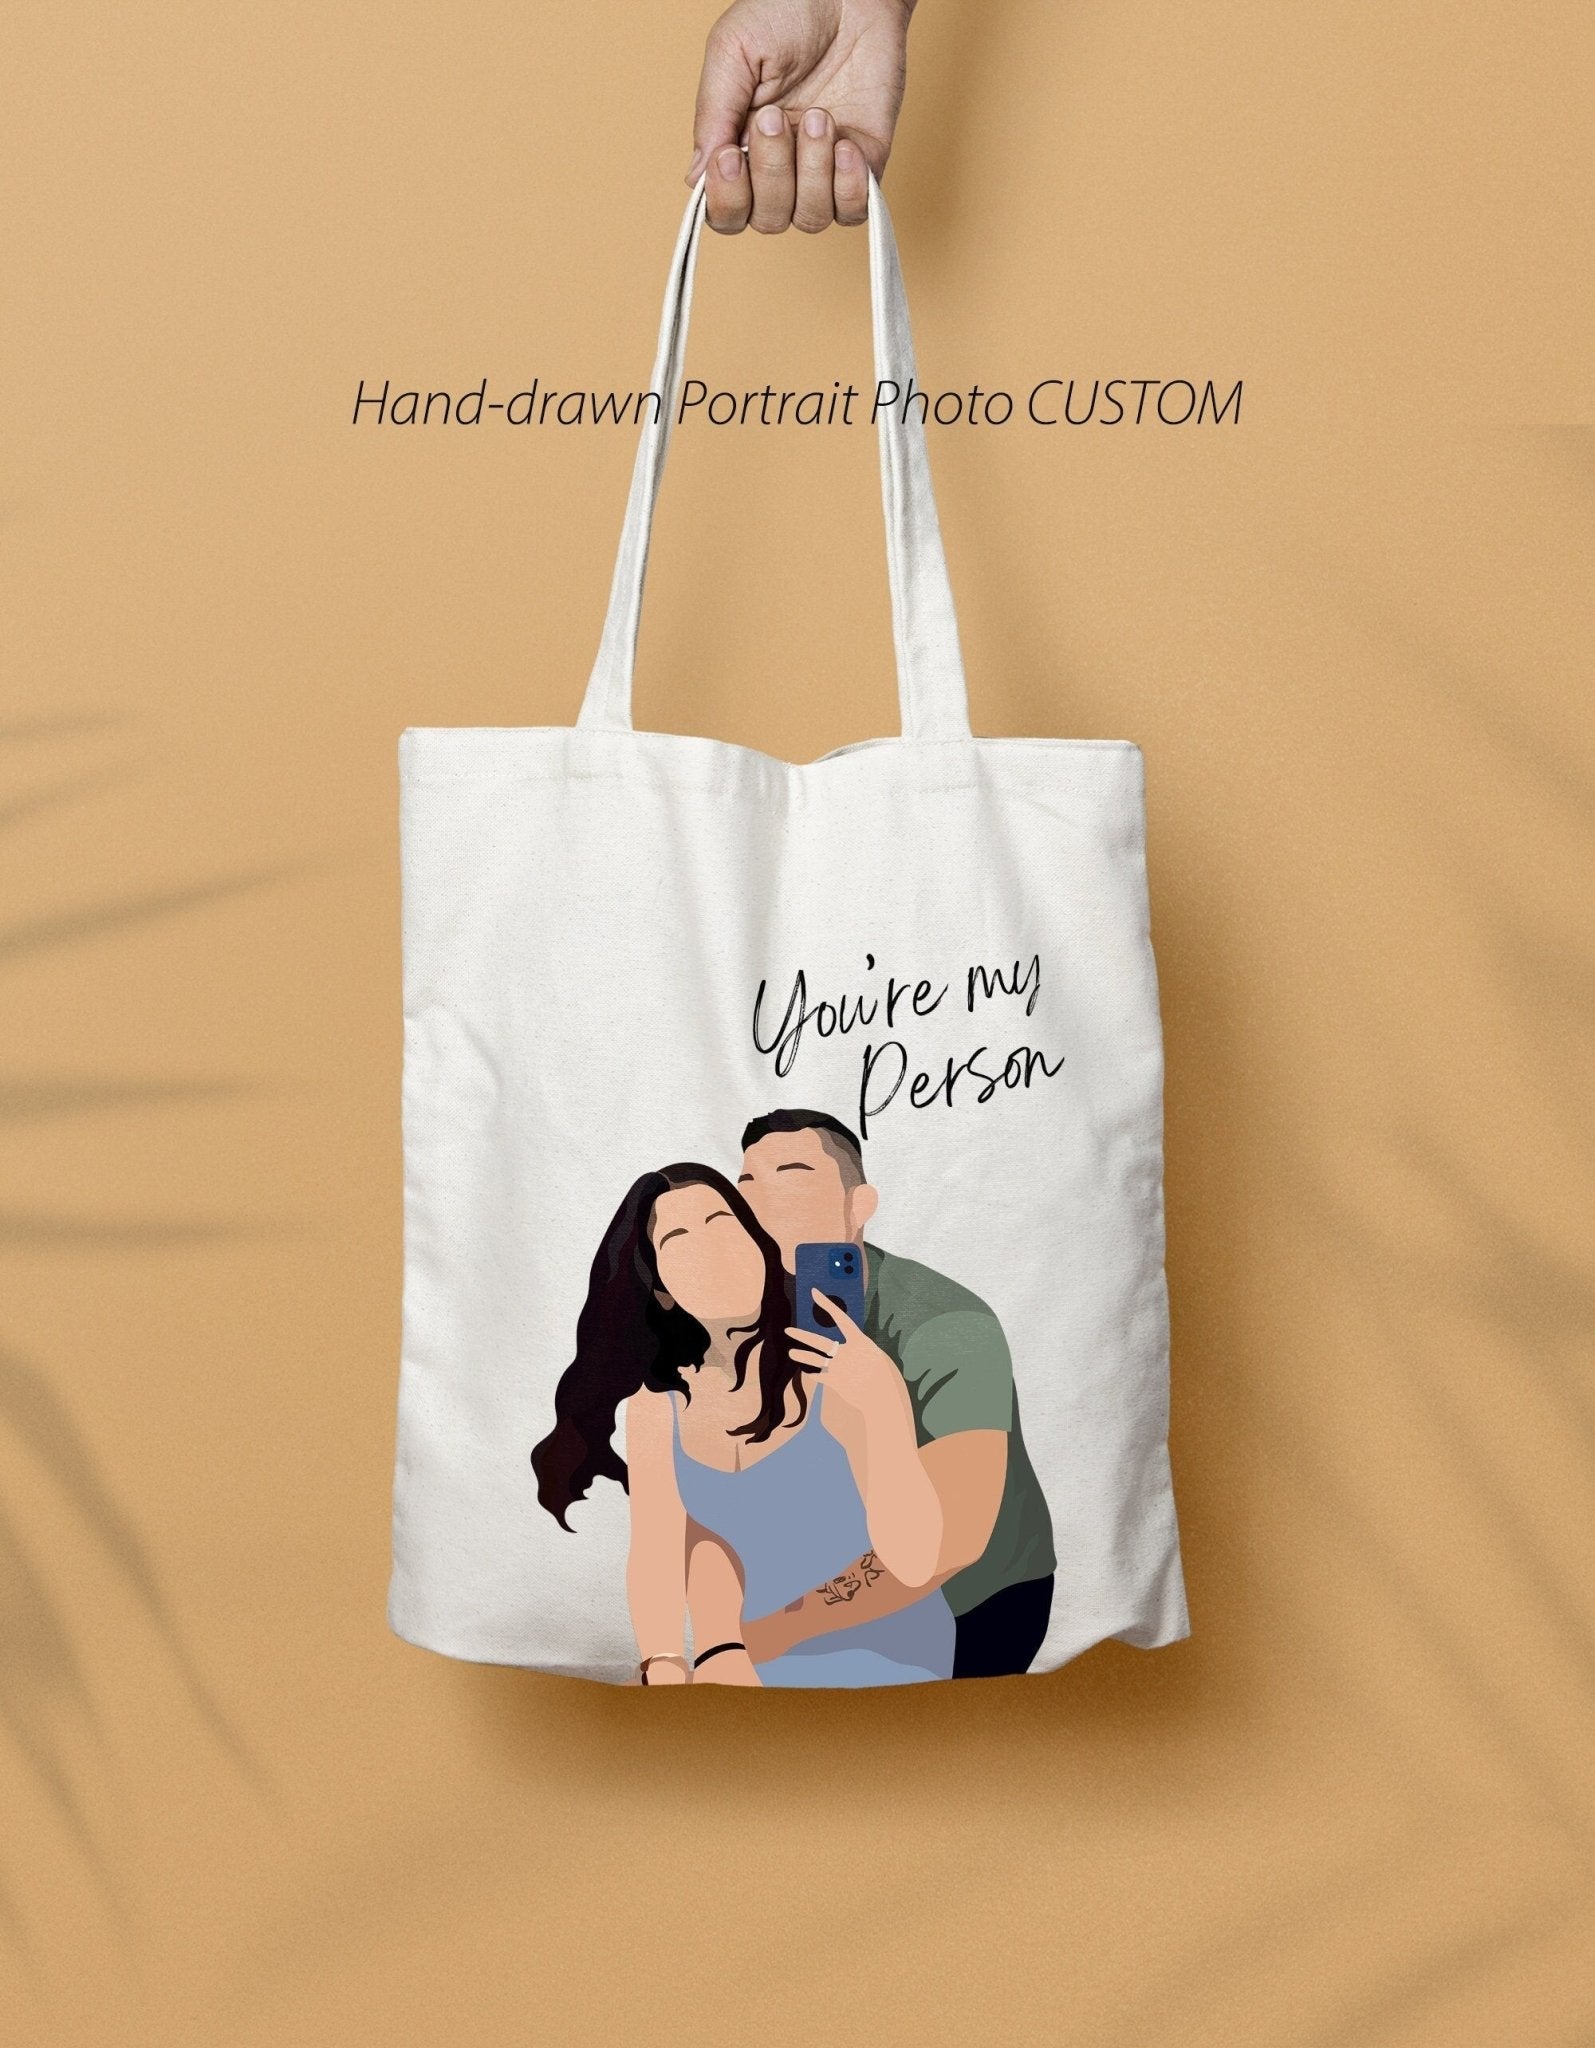 Custom Portrait Photo Canvas Tote Bag for Family, Couple, boyfriend gift